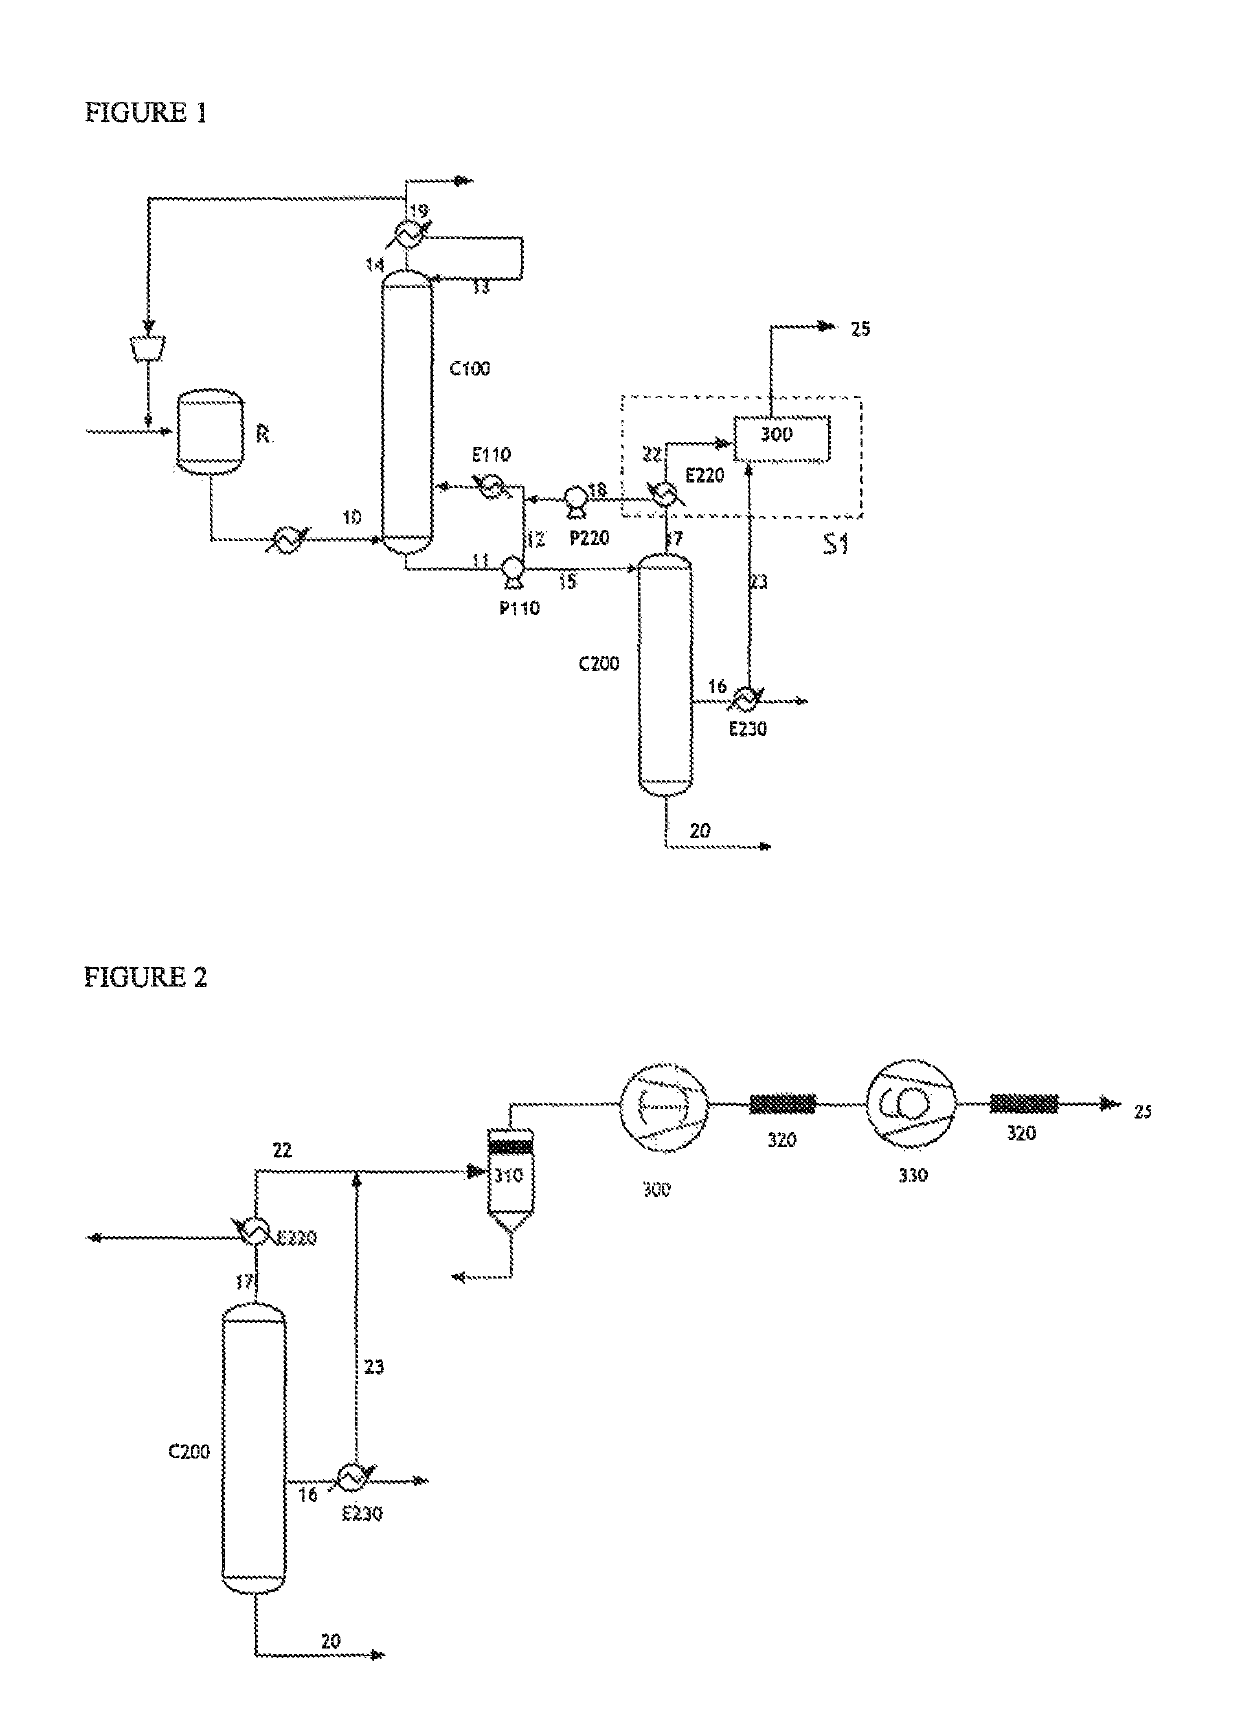 Process for producing (meth)acrylic acid